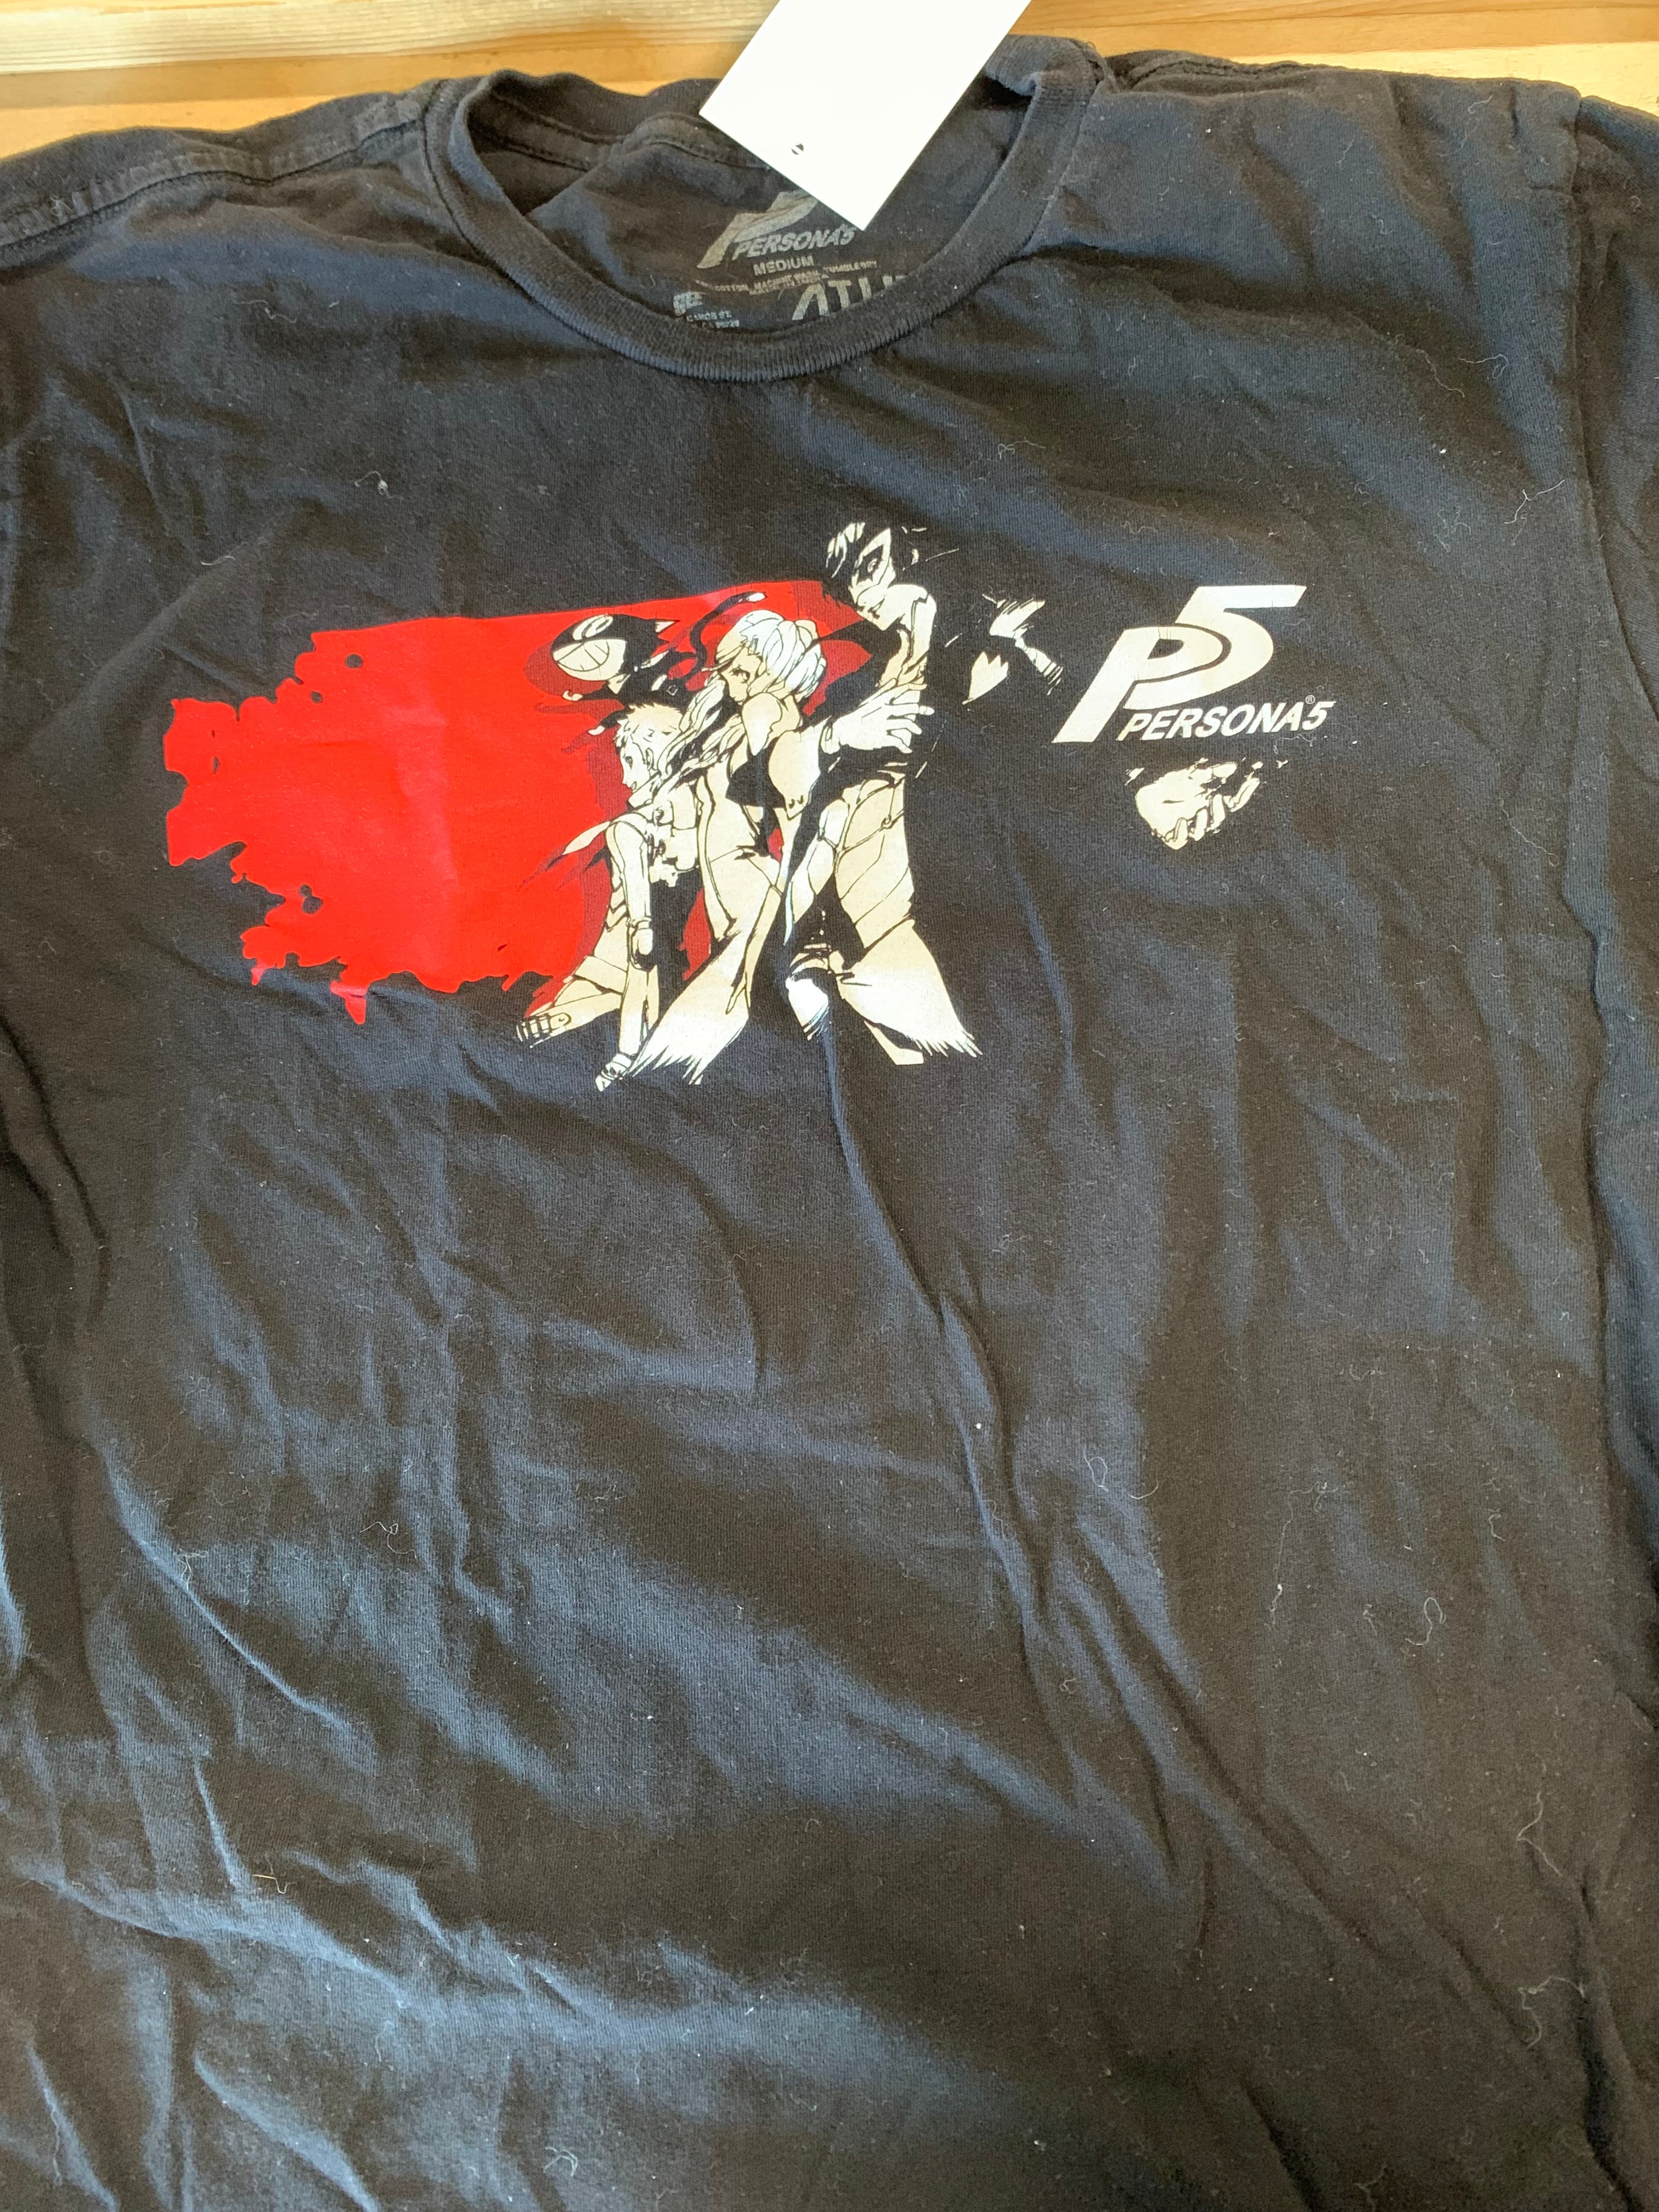 Persona 5 Character T-Shirt, Black, Medium